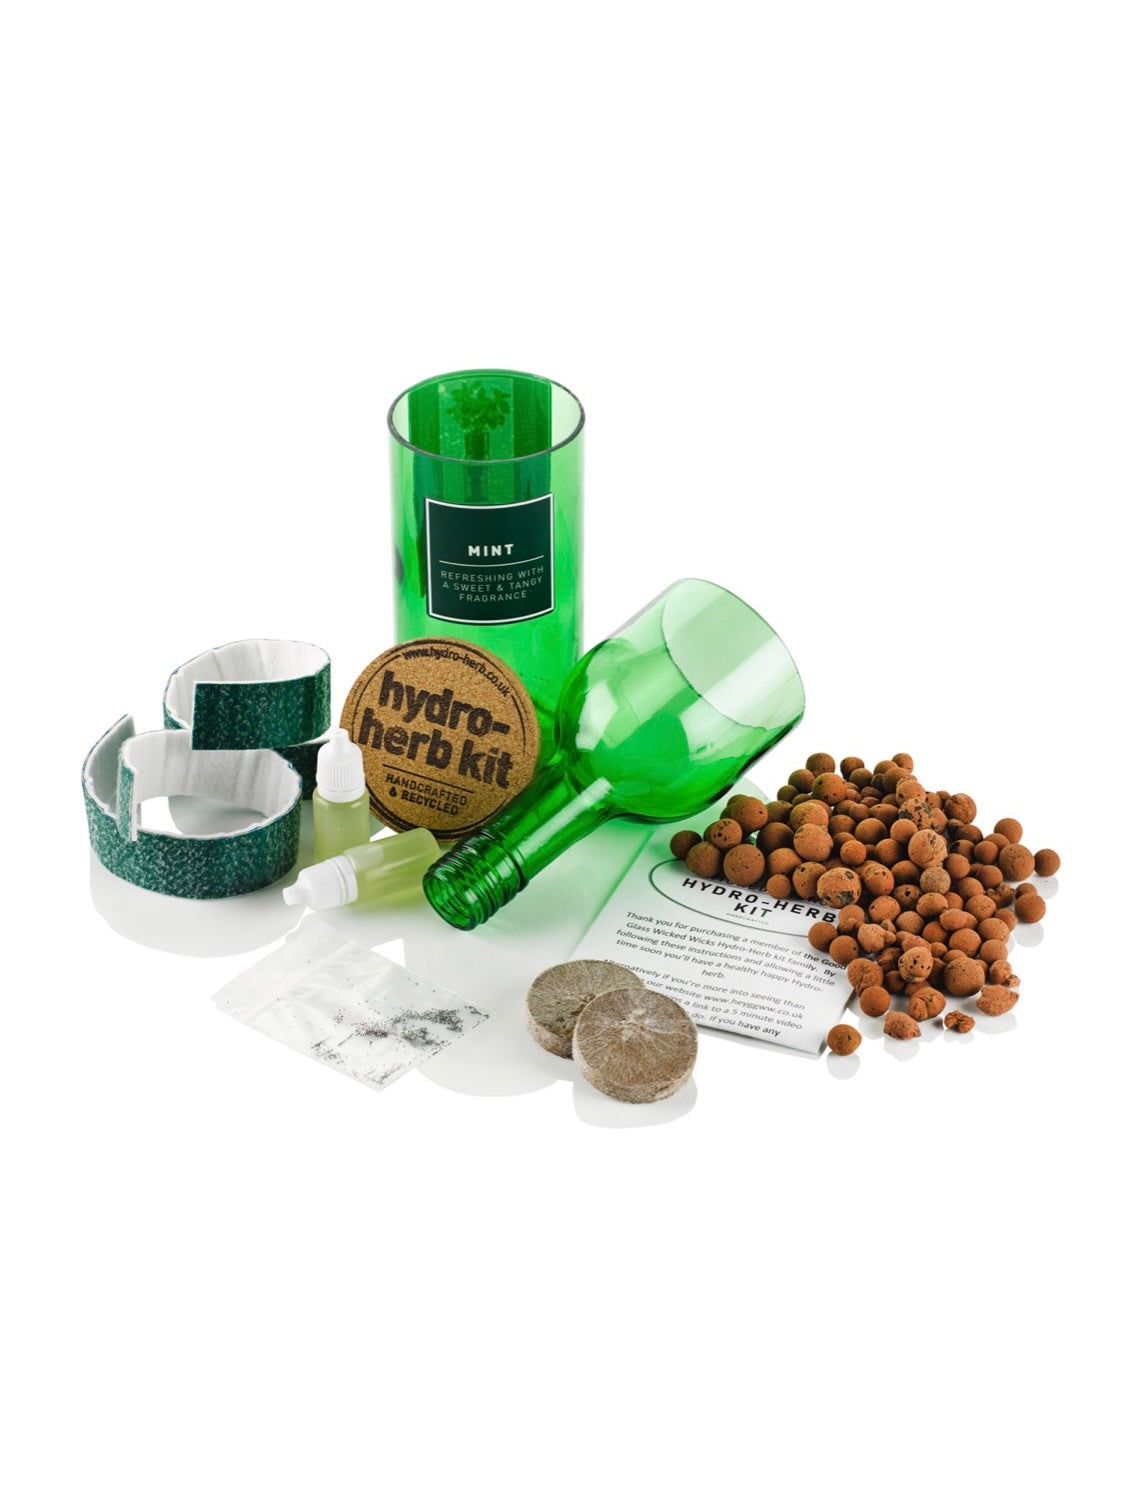 Hydro-herb Hydroponic Grow Kit - Mint